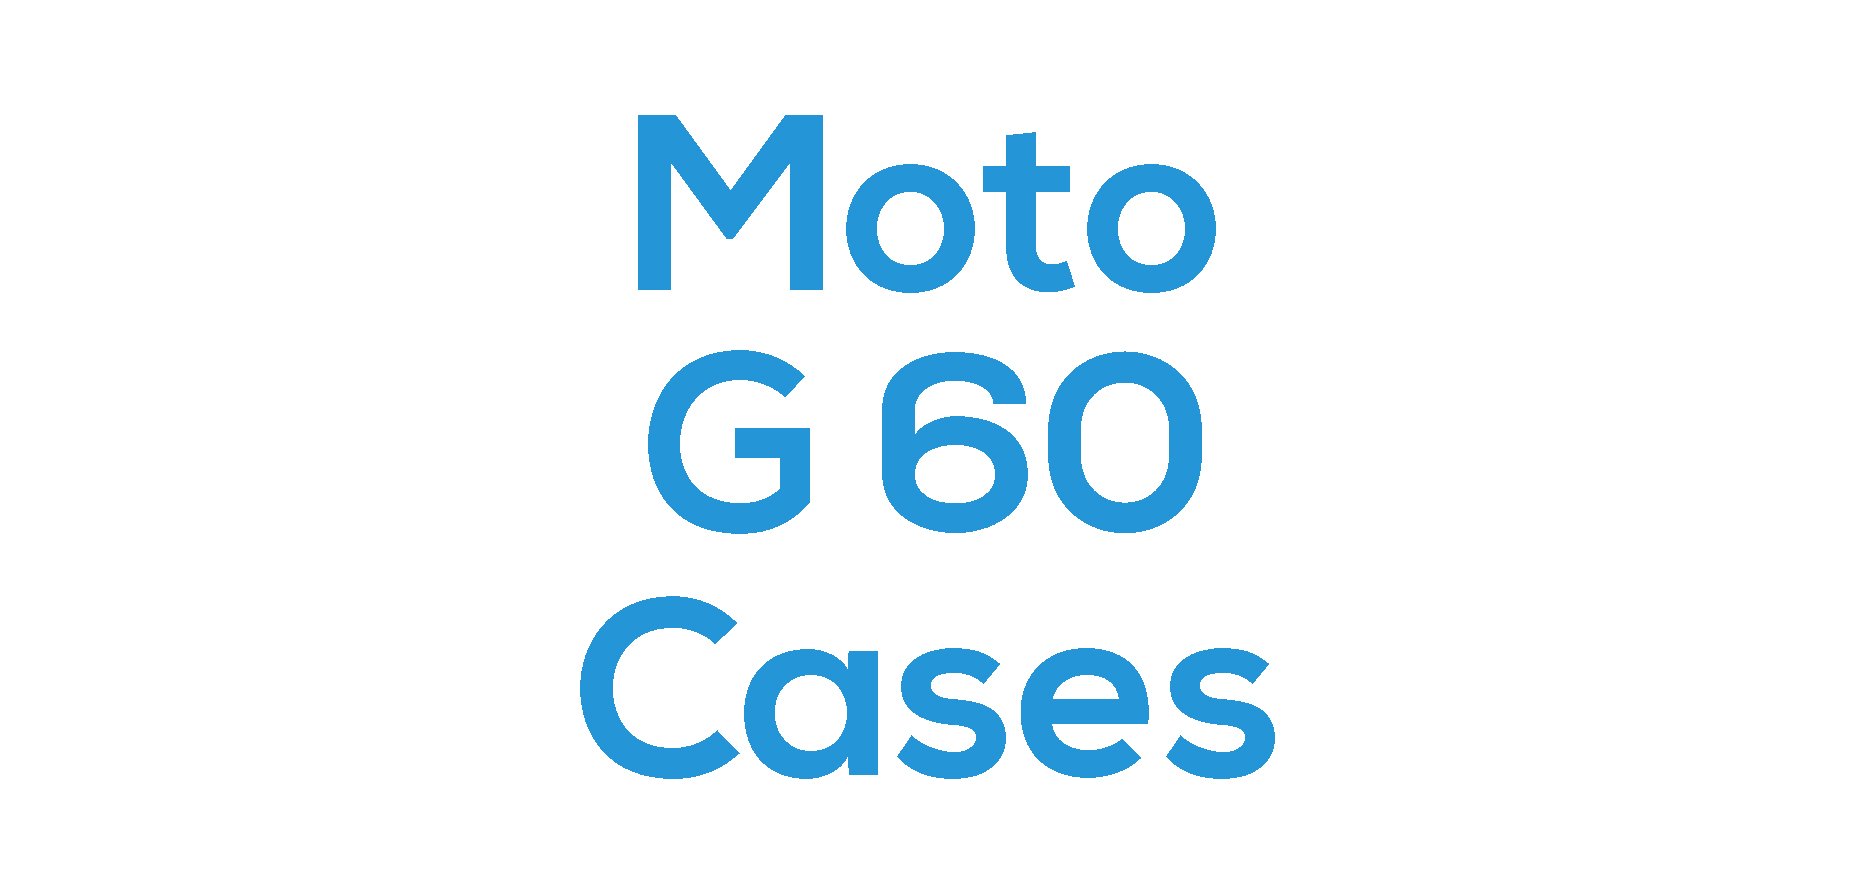 Moto G60 Cases